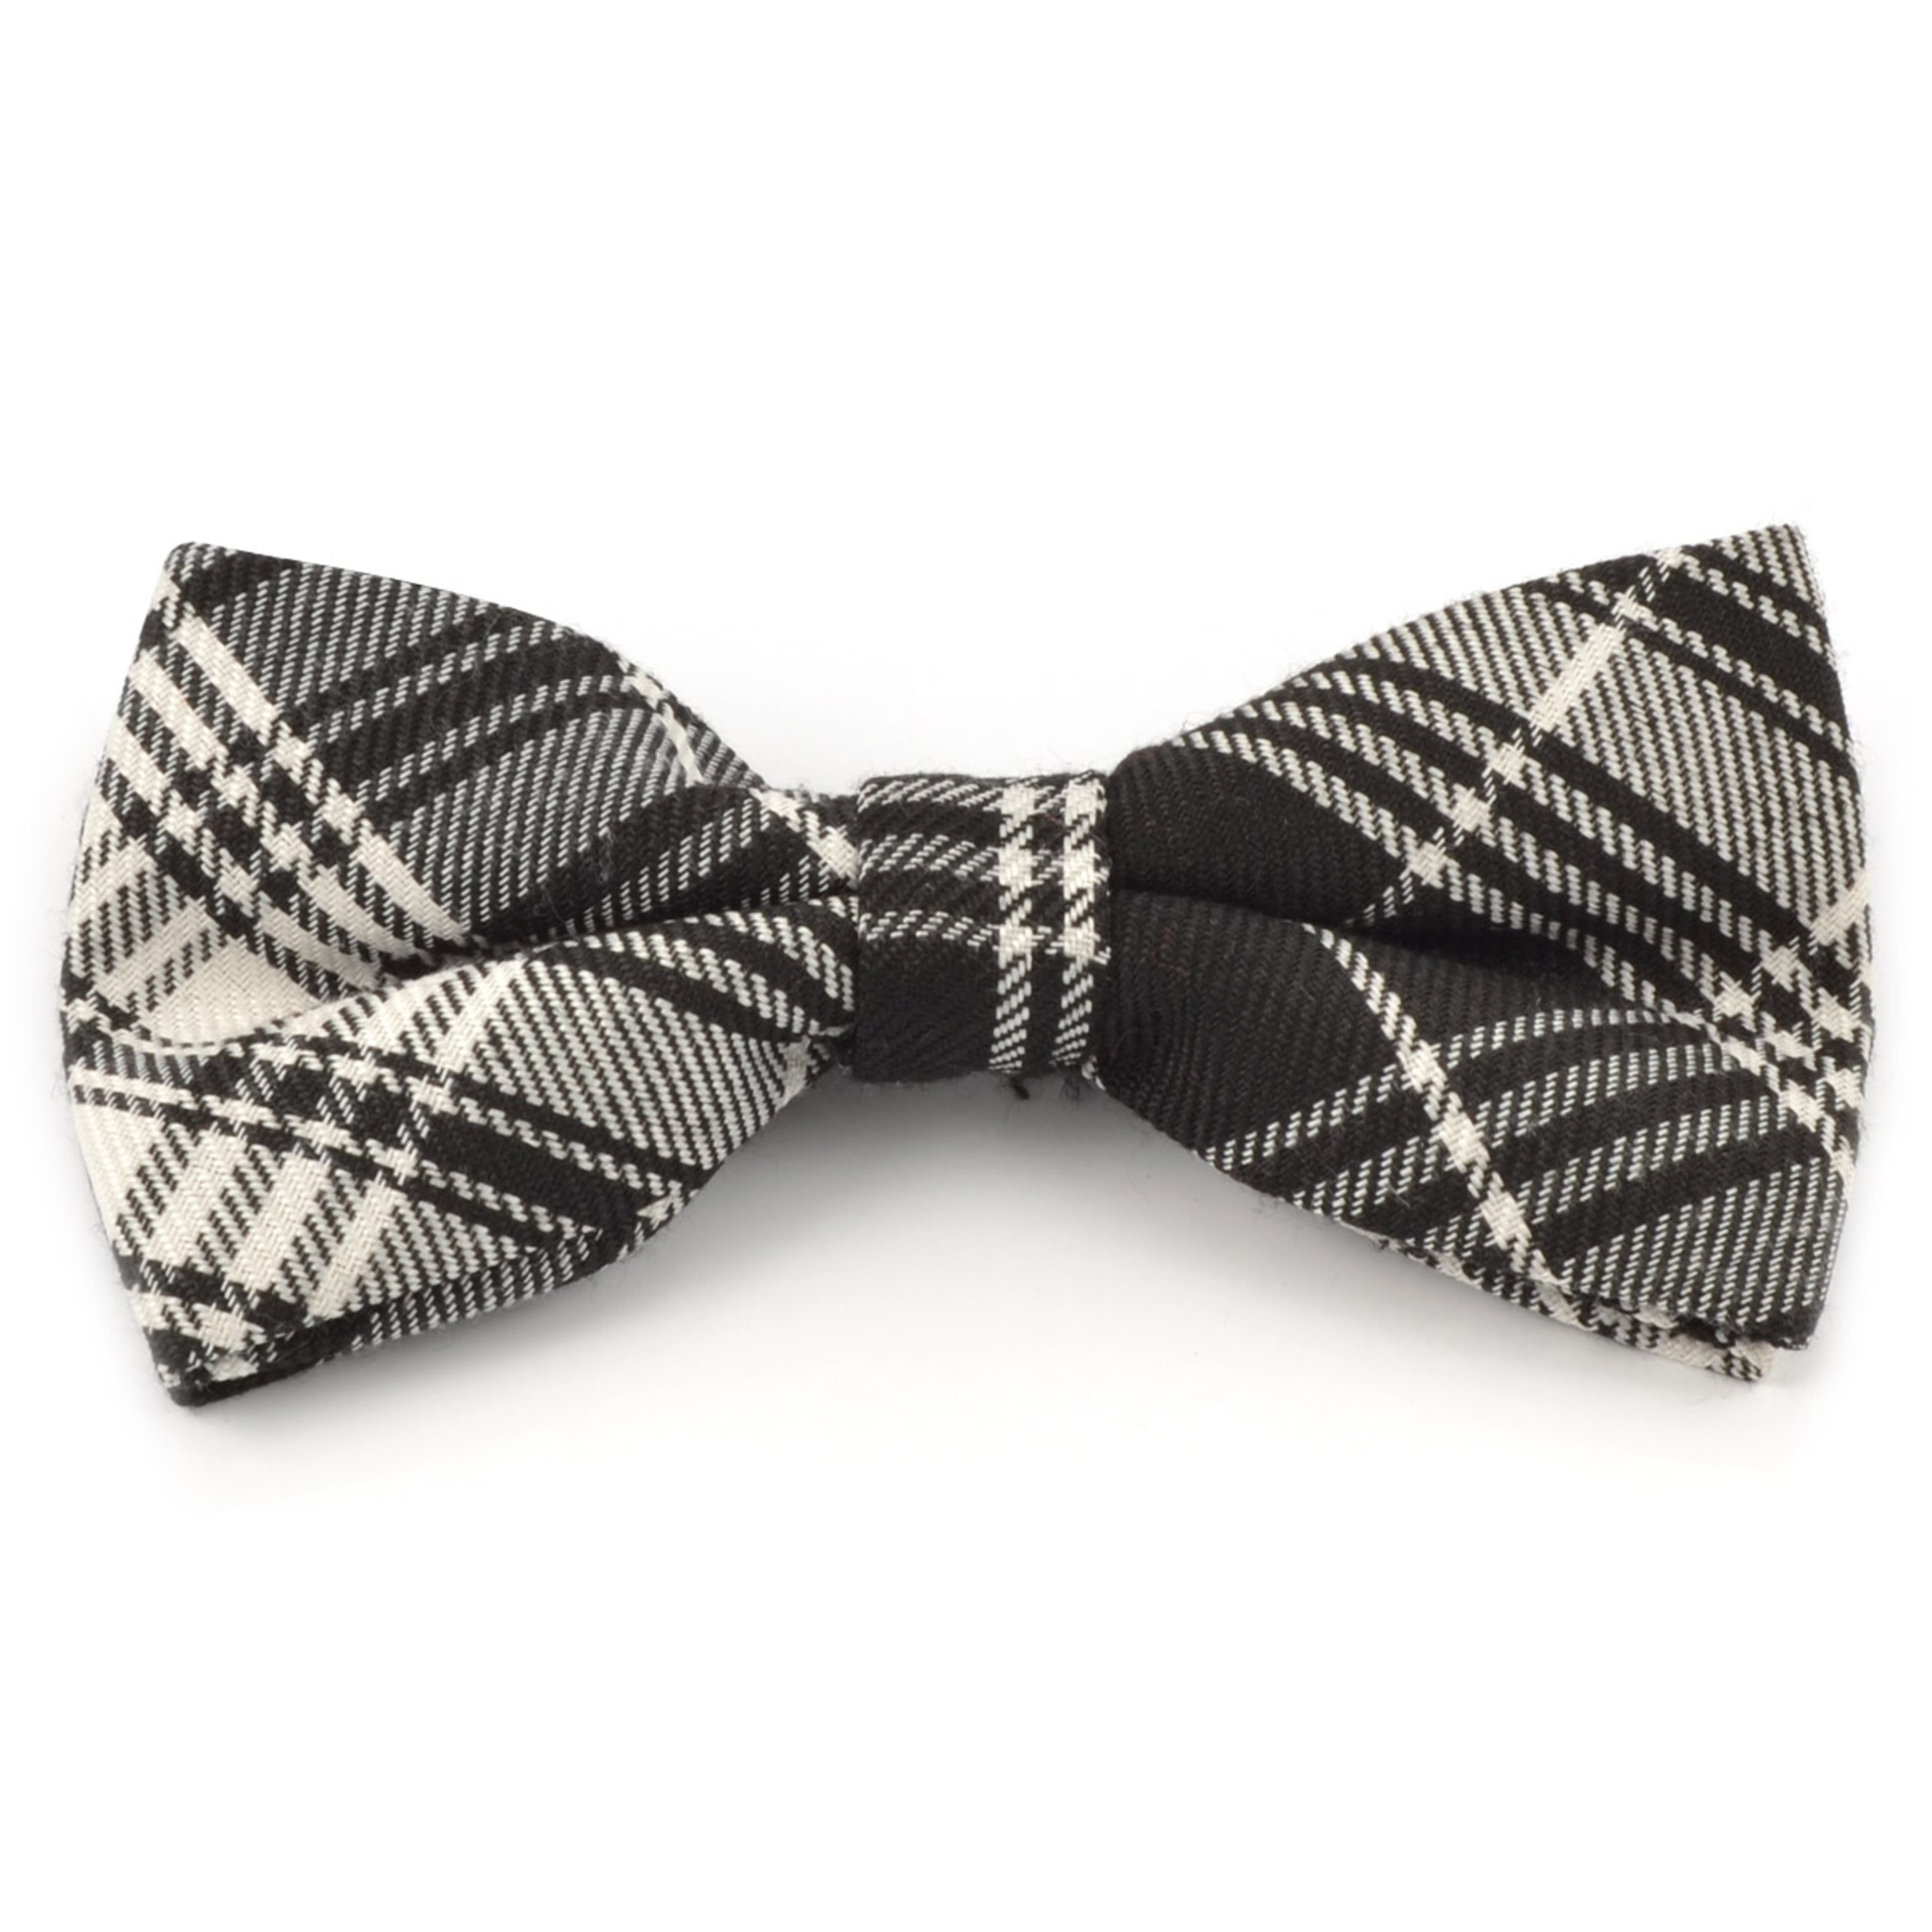 Black & White Chequered Soft Bow Tie